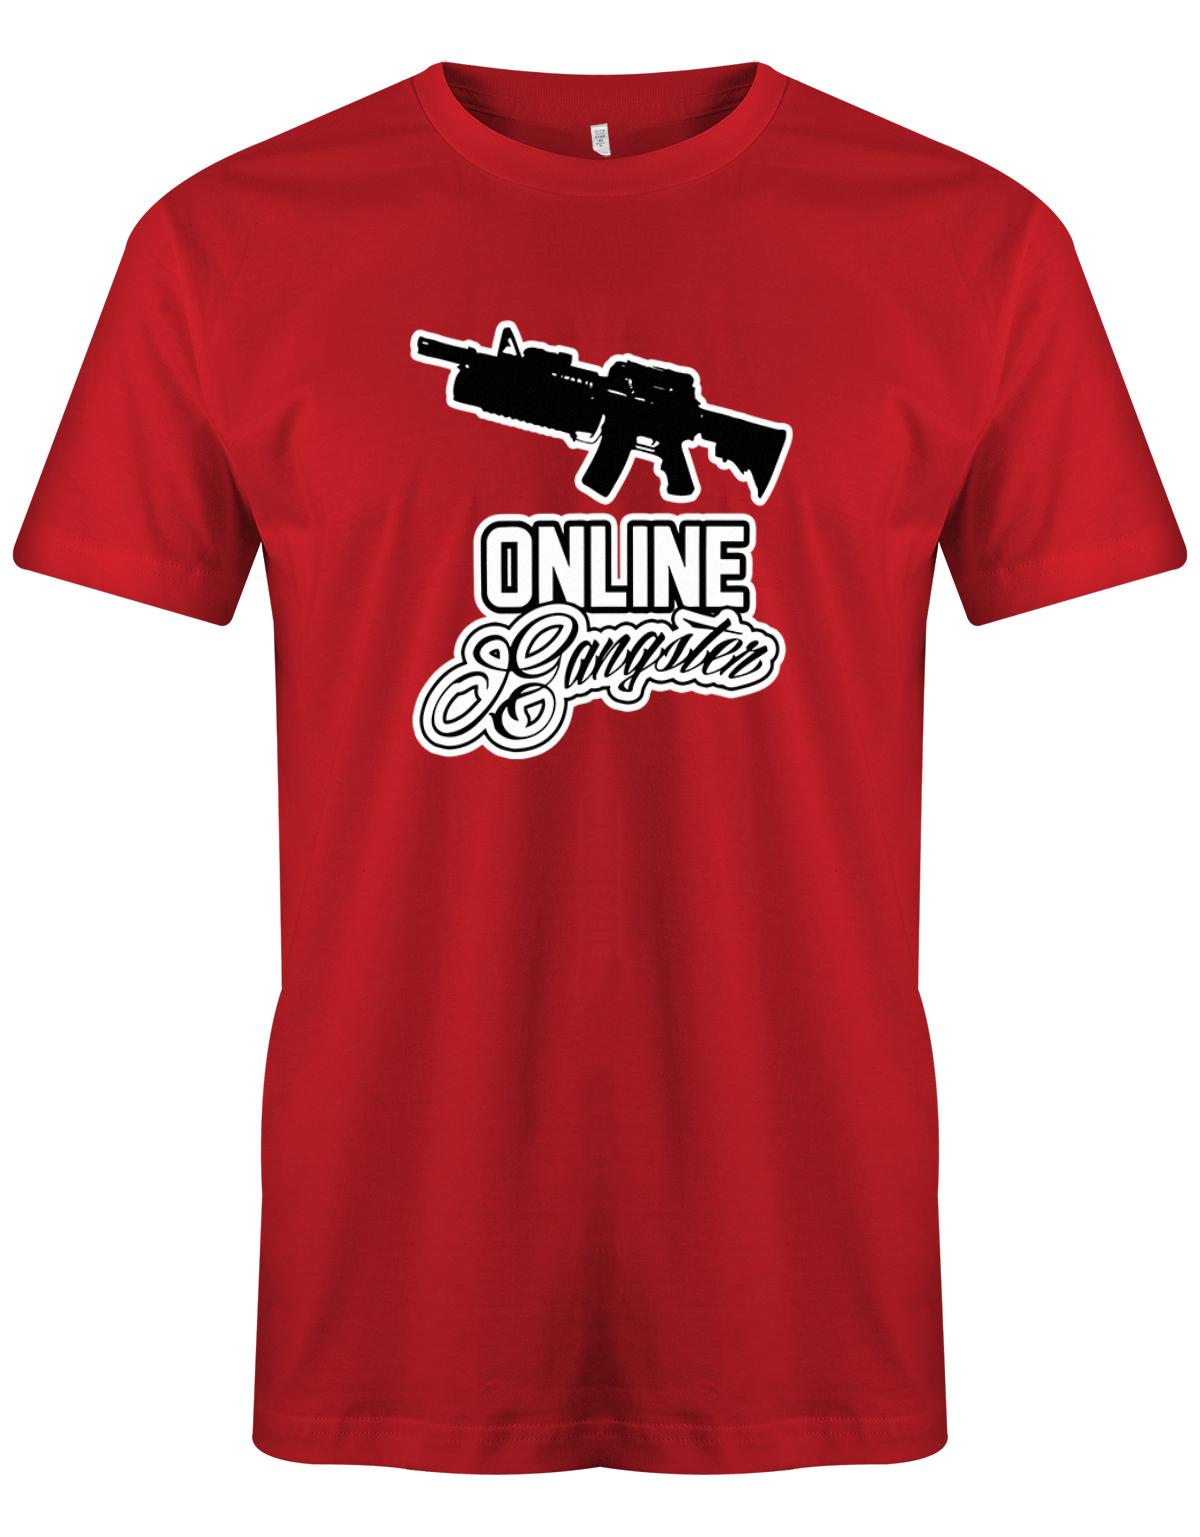 Online-Gangster-Herren-Shirt-Rot